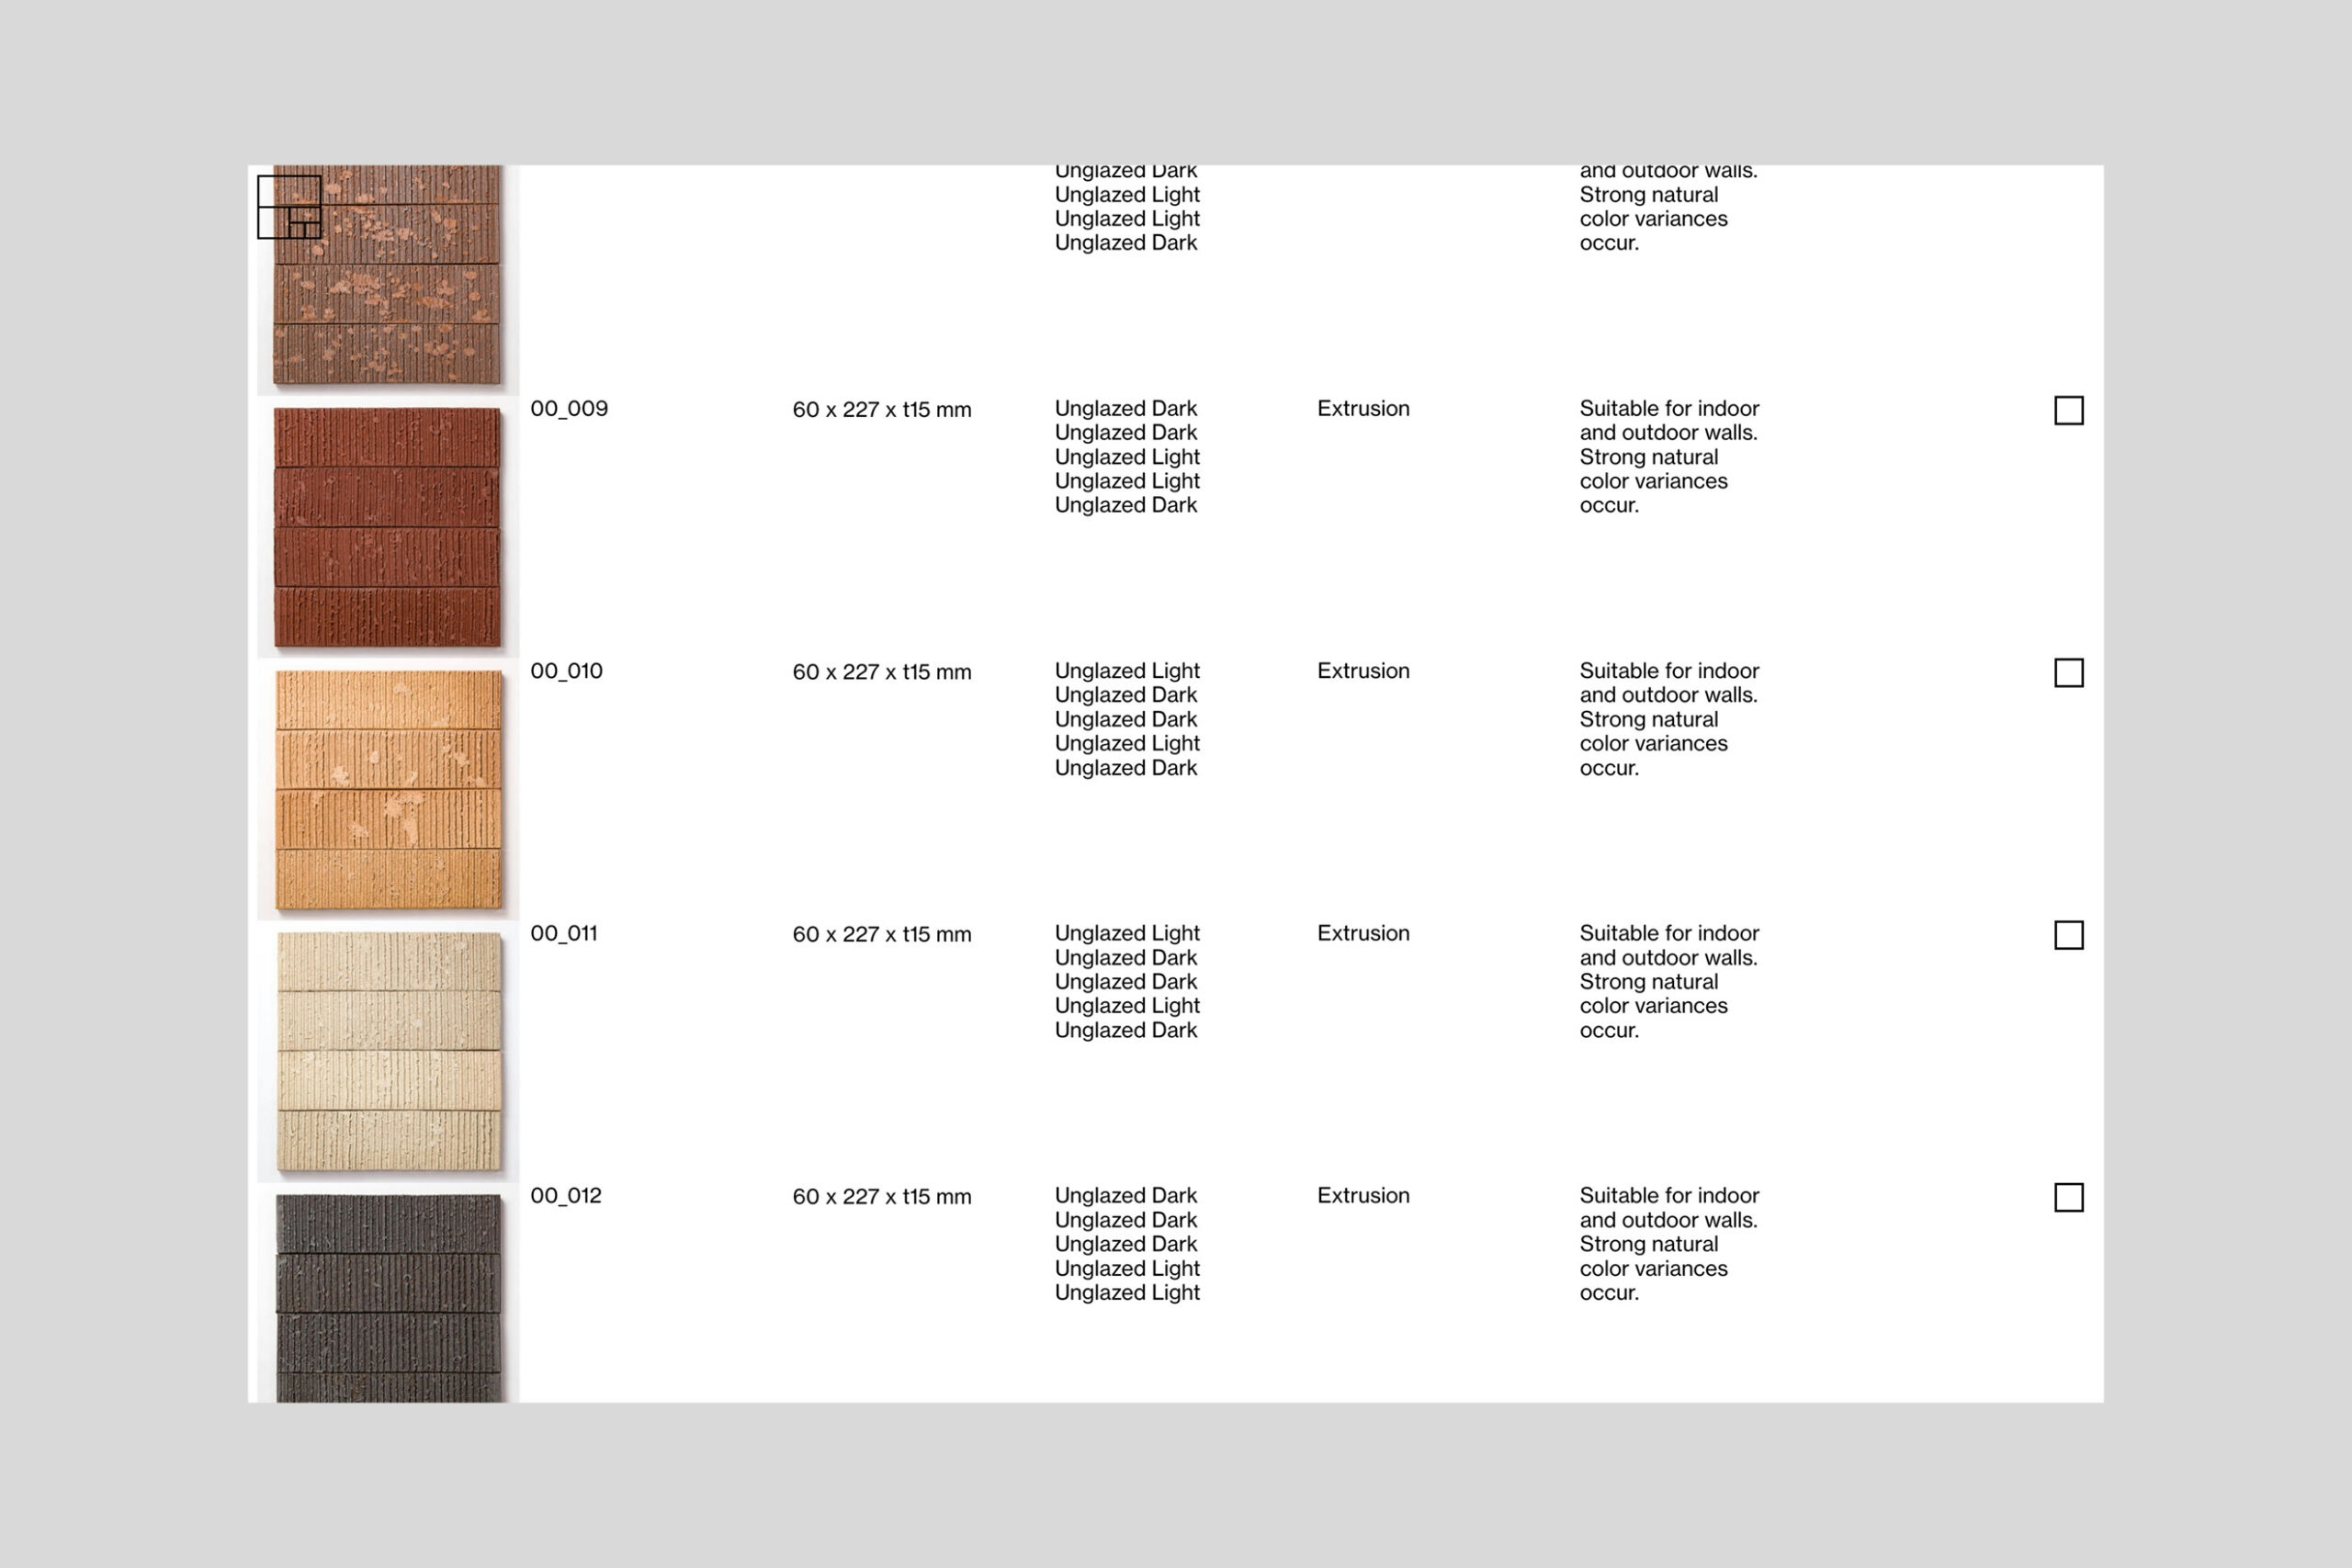 Tajimi Custom Tiles showing sample tiles for selection in an orgainzed list